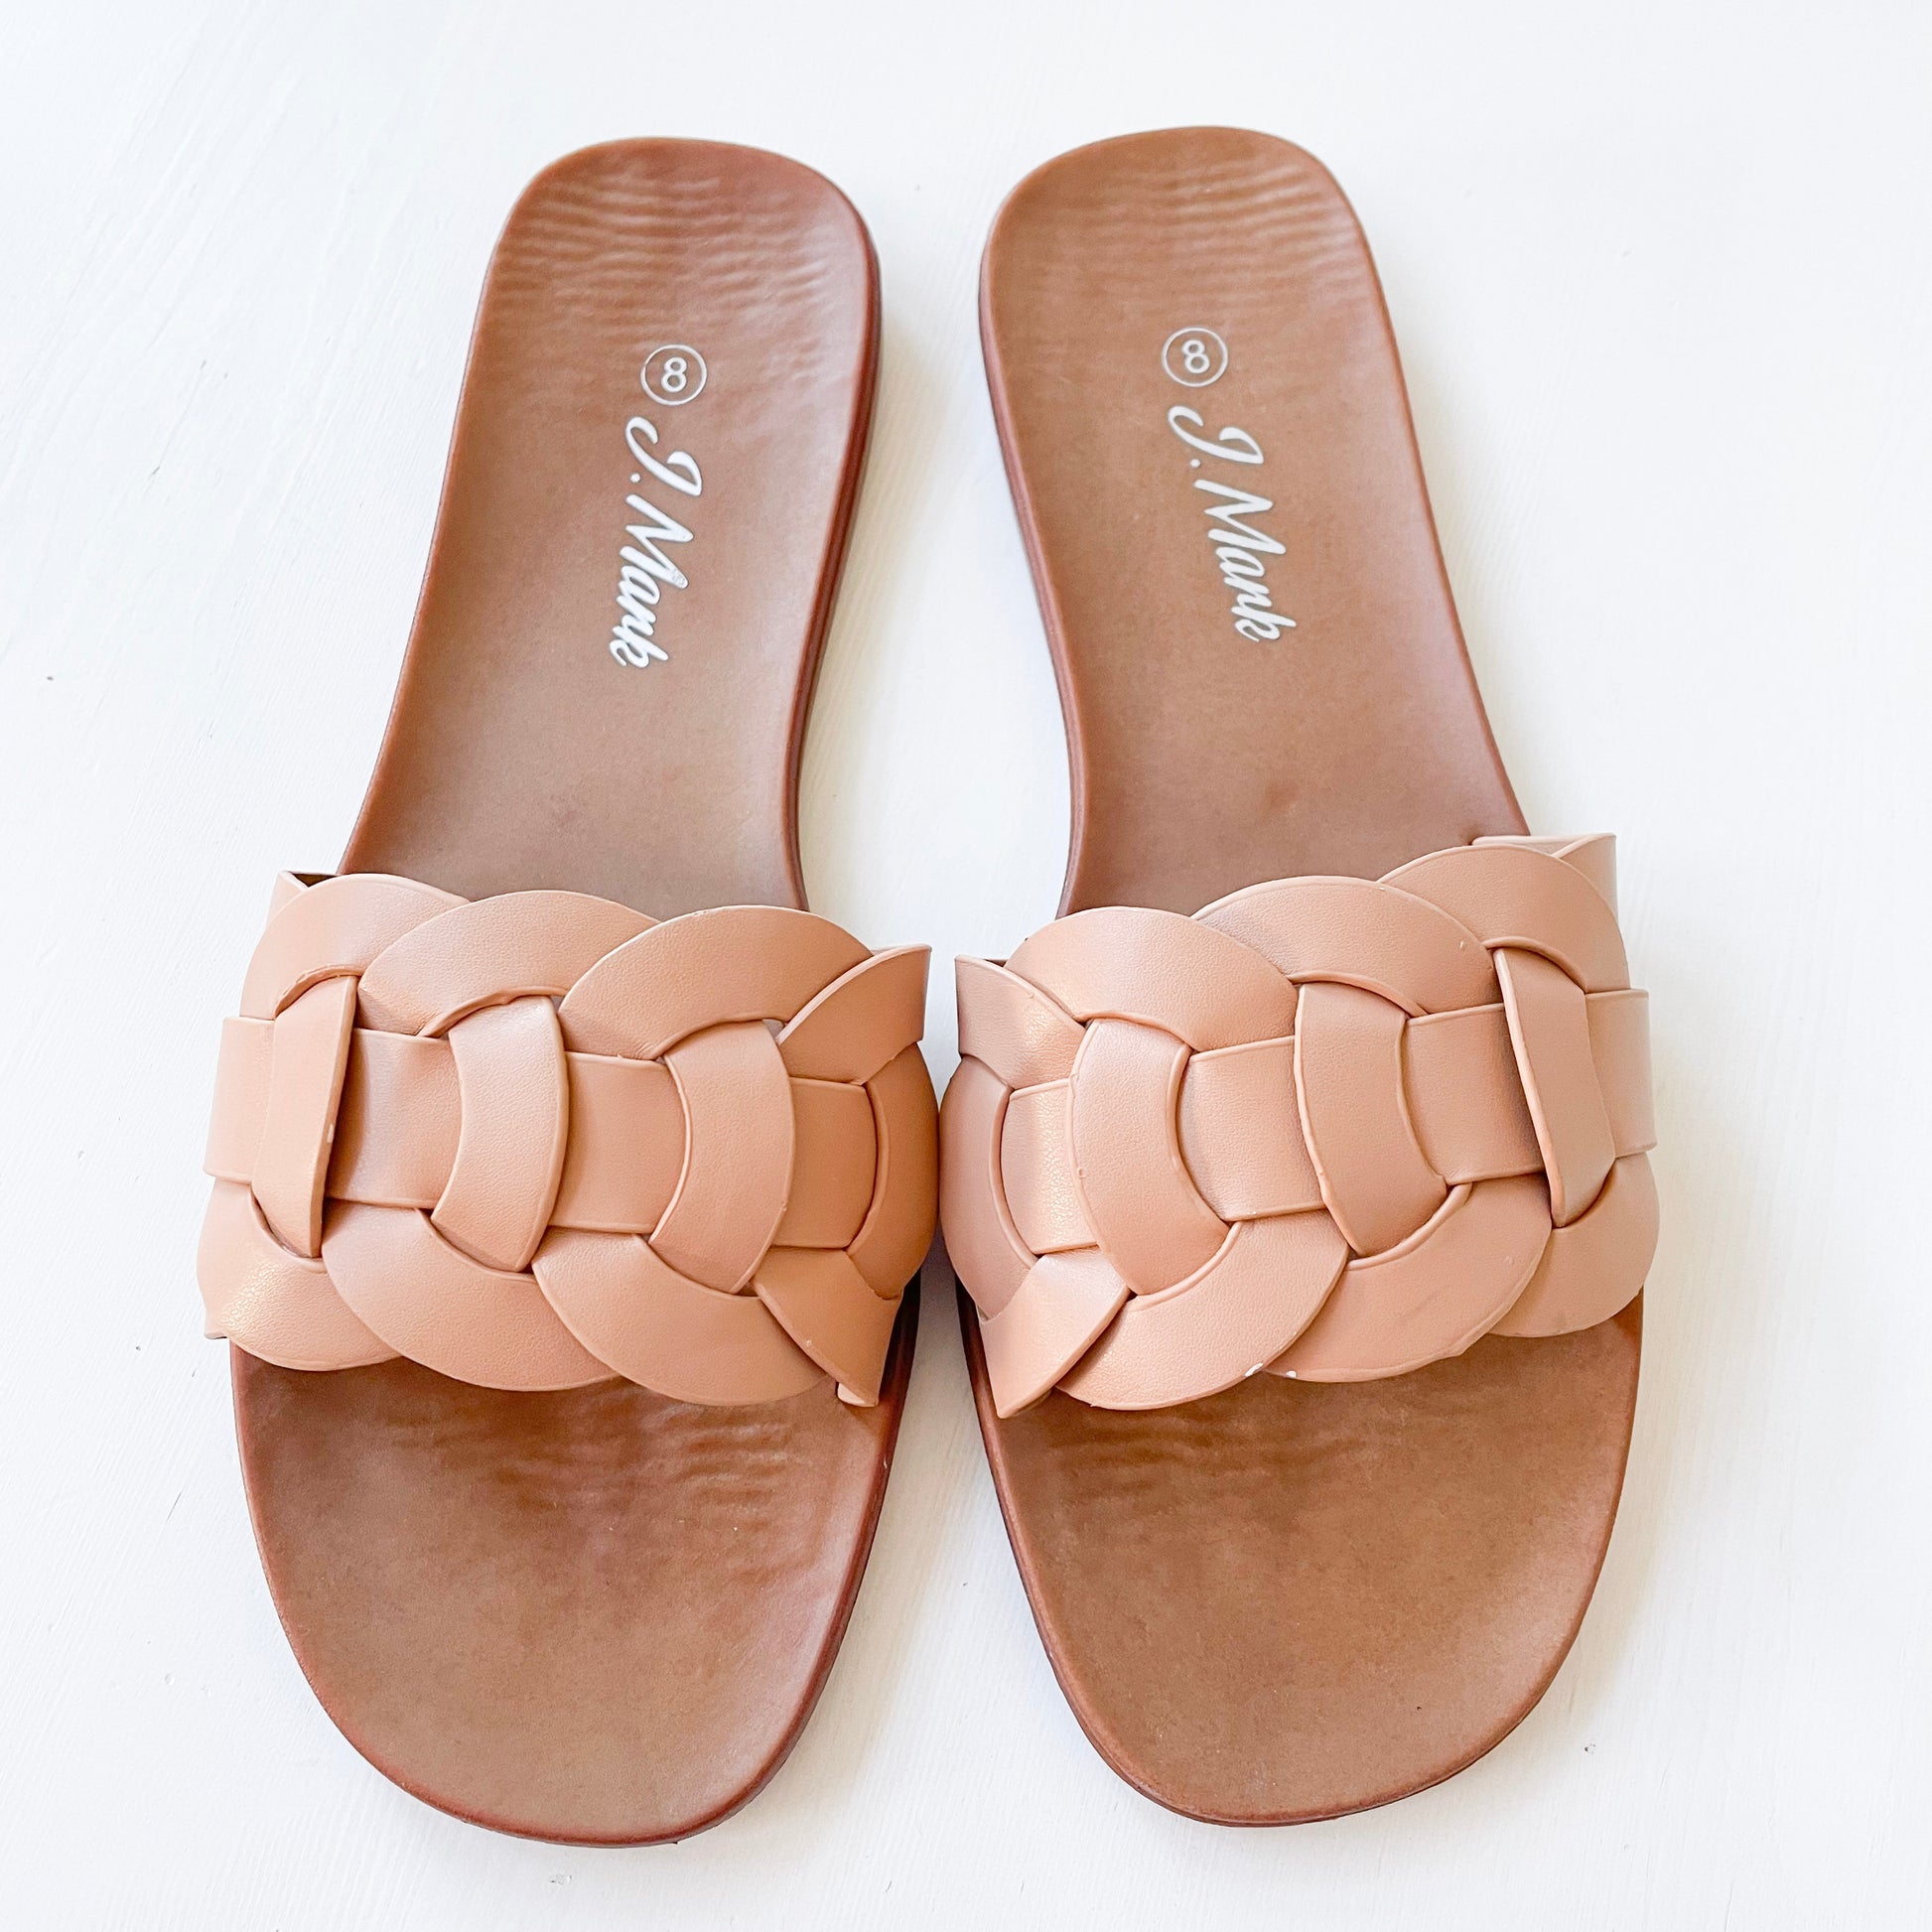 j mark tracy-02 tan braided style flat sandals